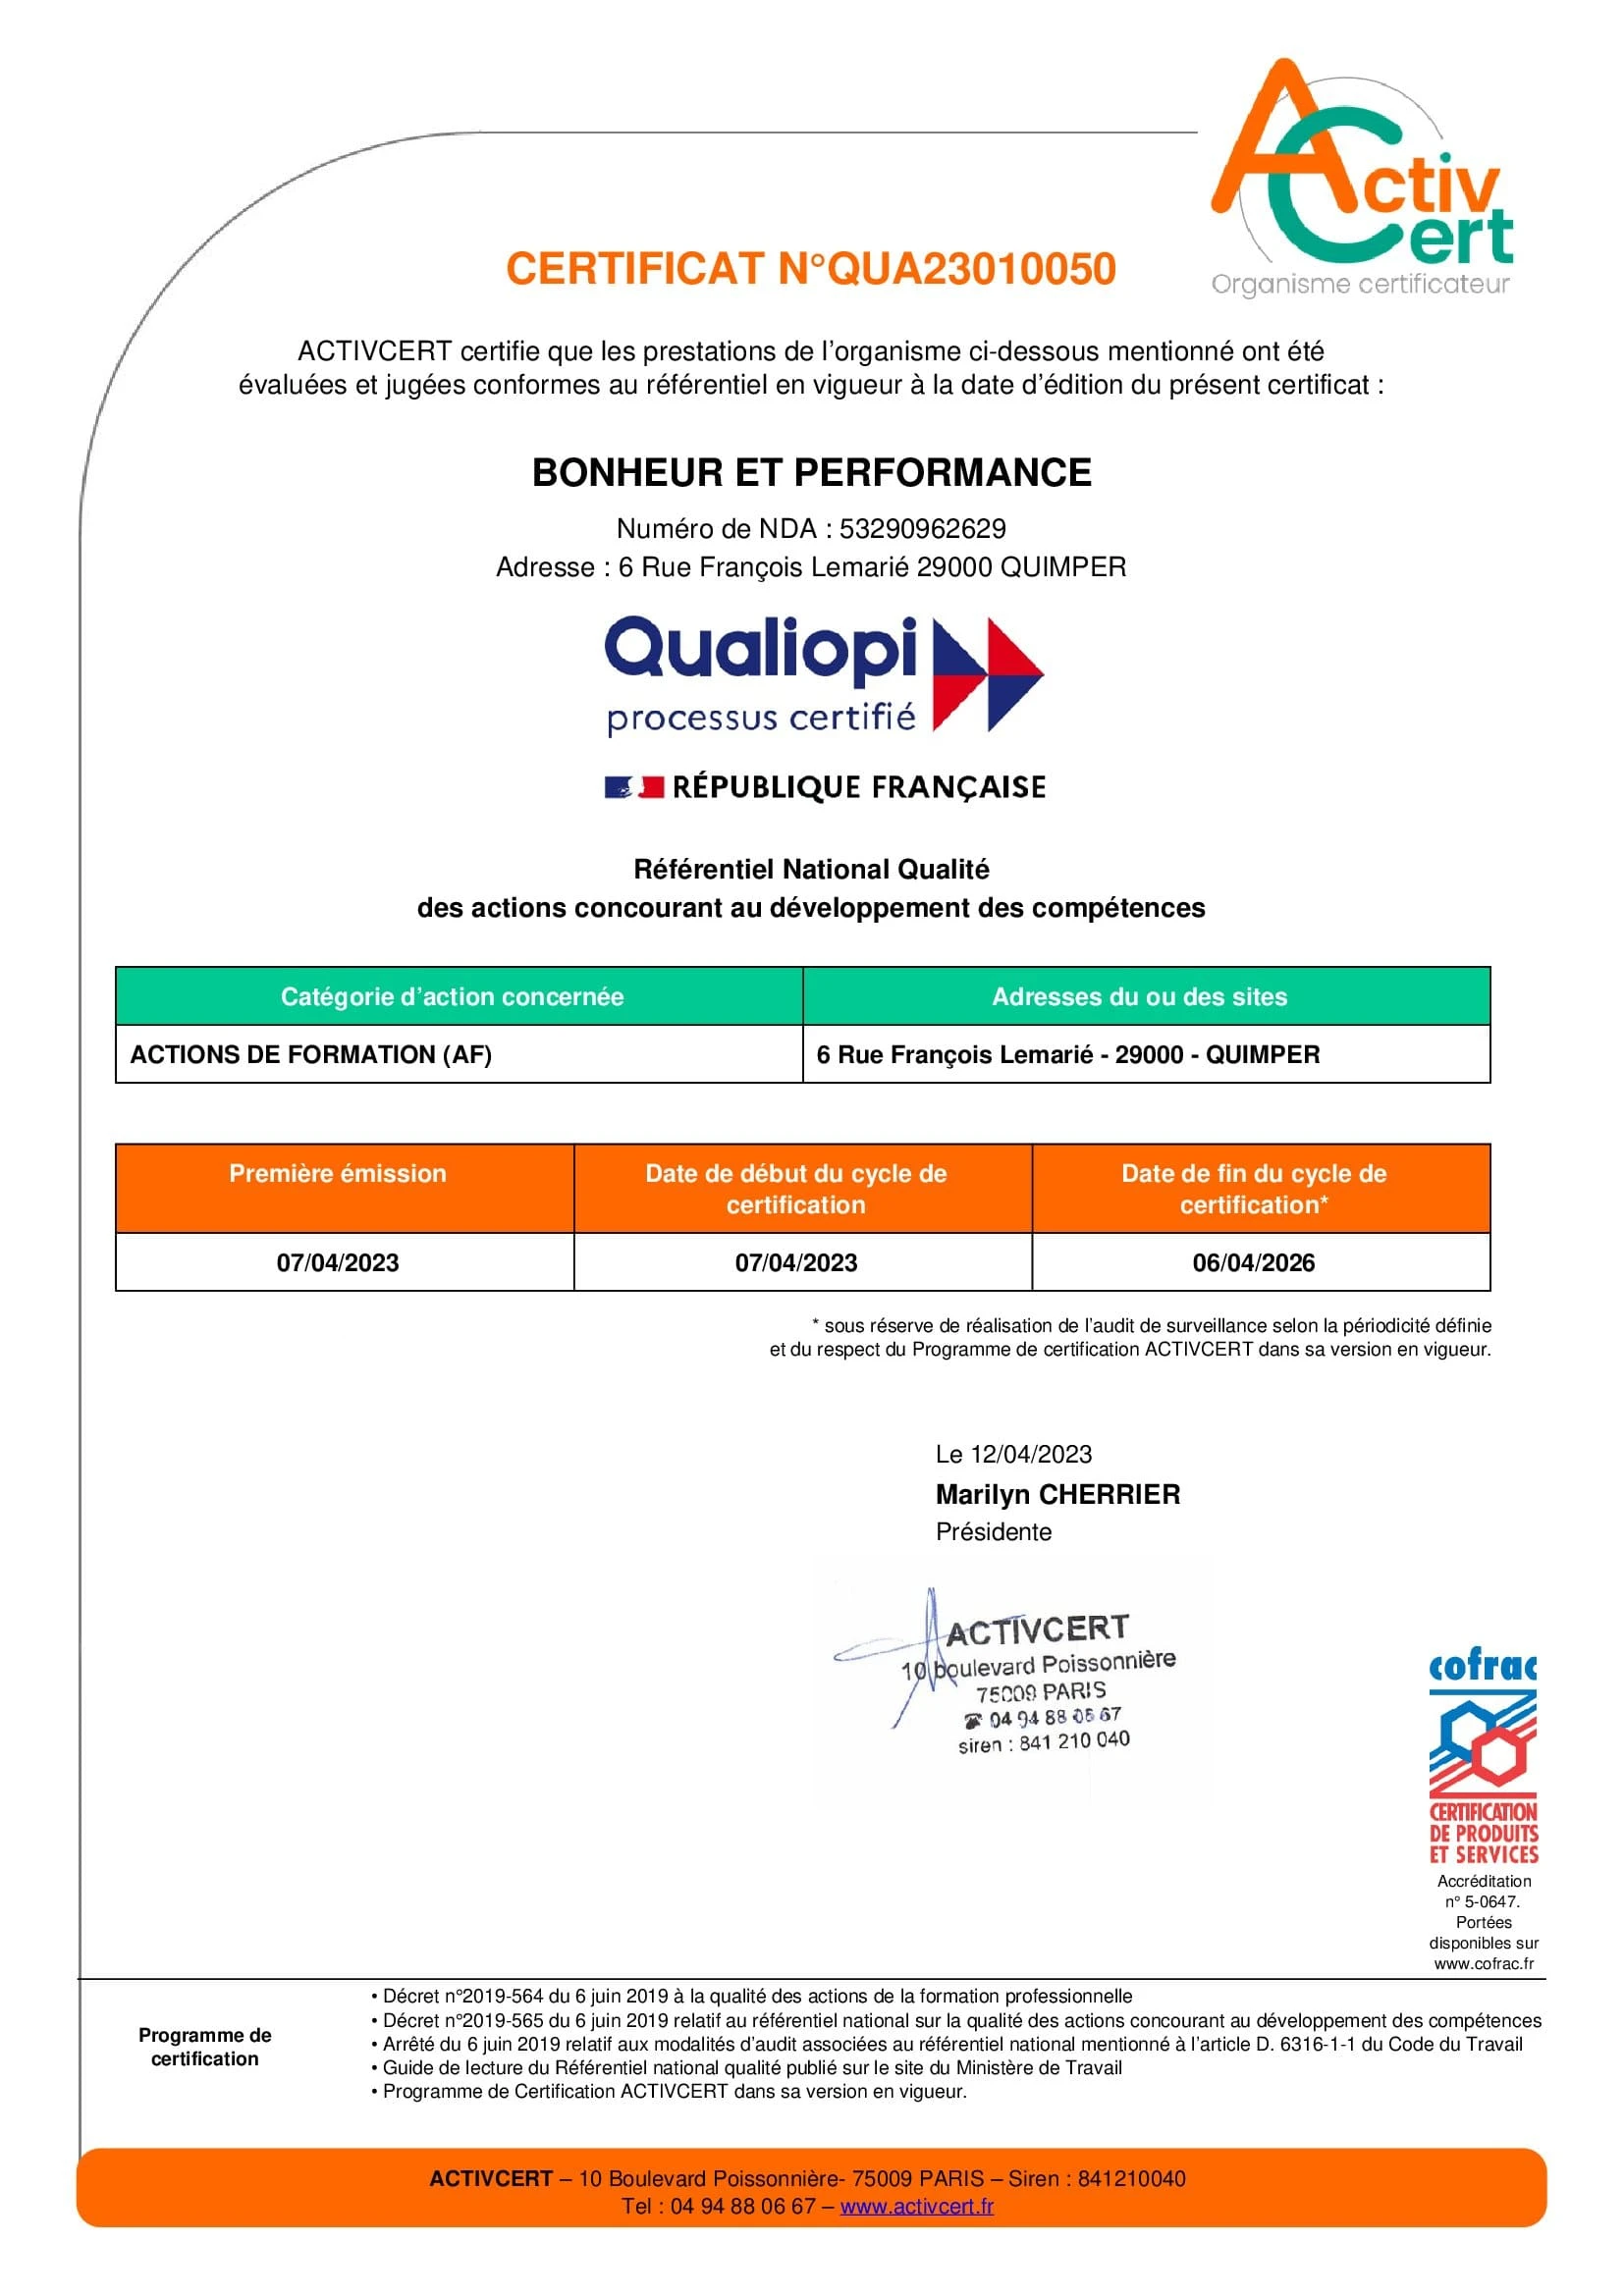 1402-certificat-qualiopi---bonheur-et-performance-17007378450503.jpg